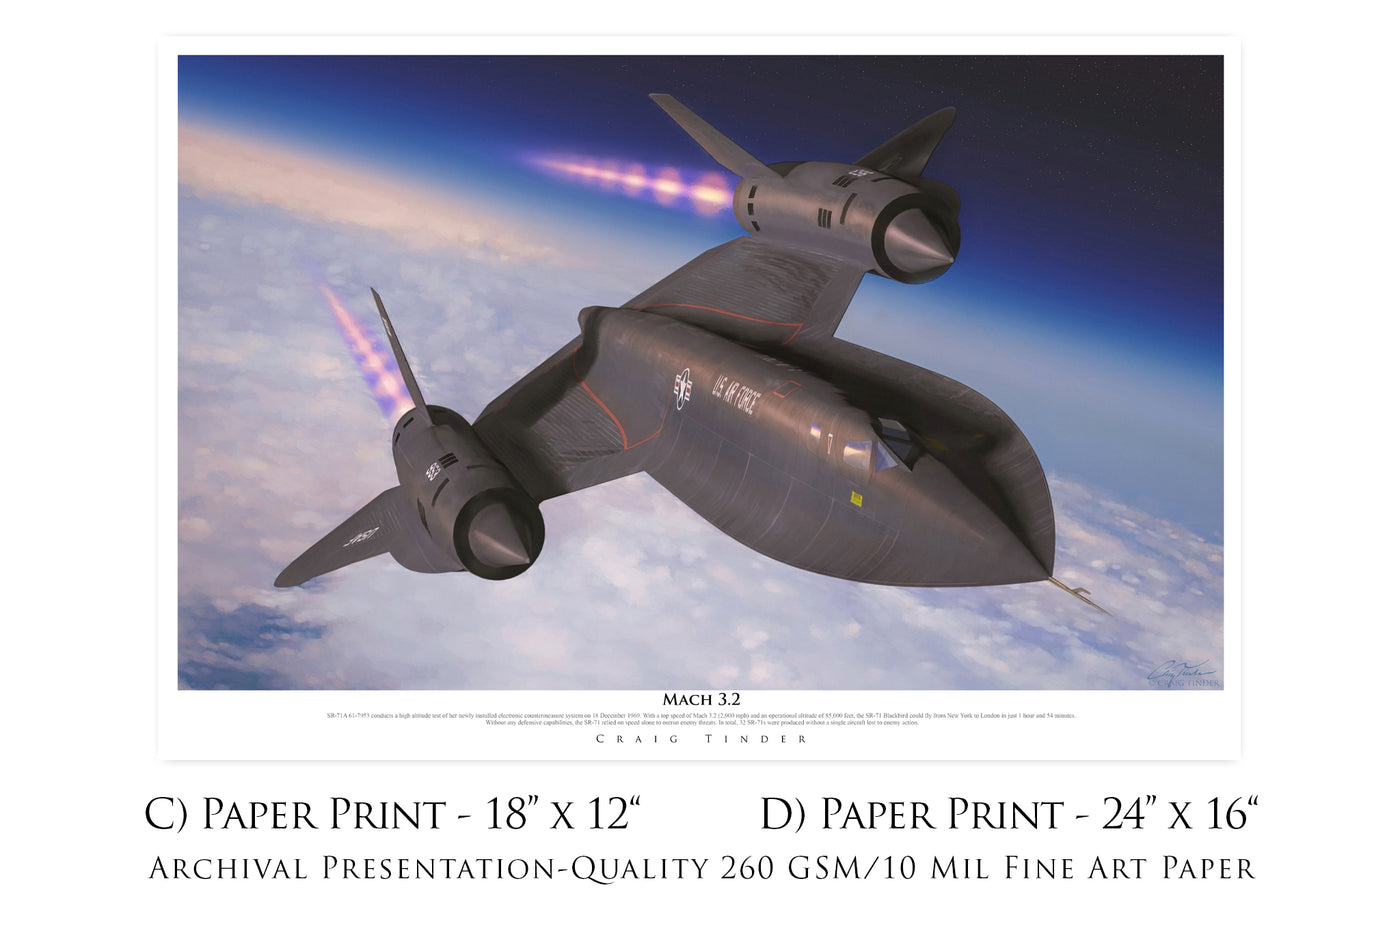 Mach 3.2 - SR-71A Blackbird Aviation Art-Art Print-Aces In Action: The Workshop of Artist Craig Tinder